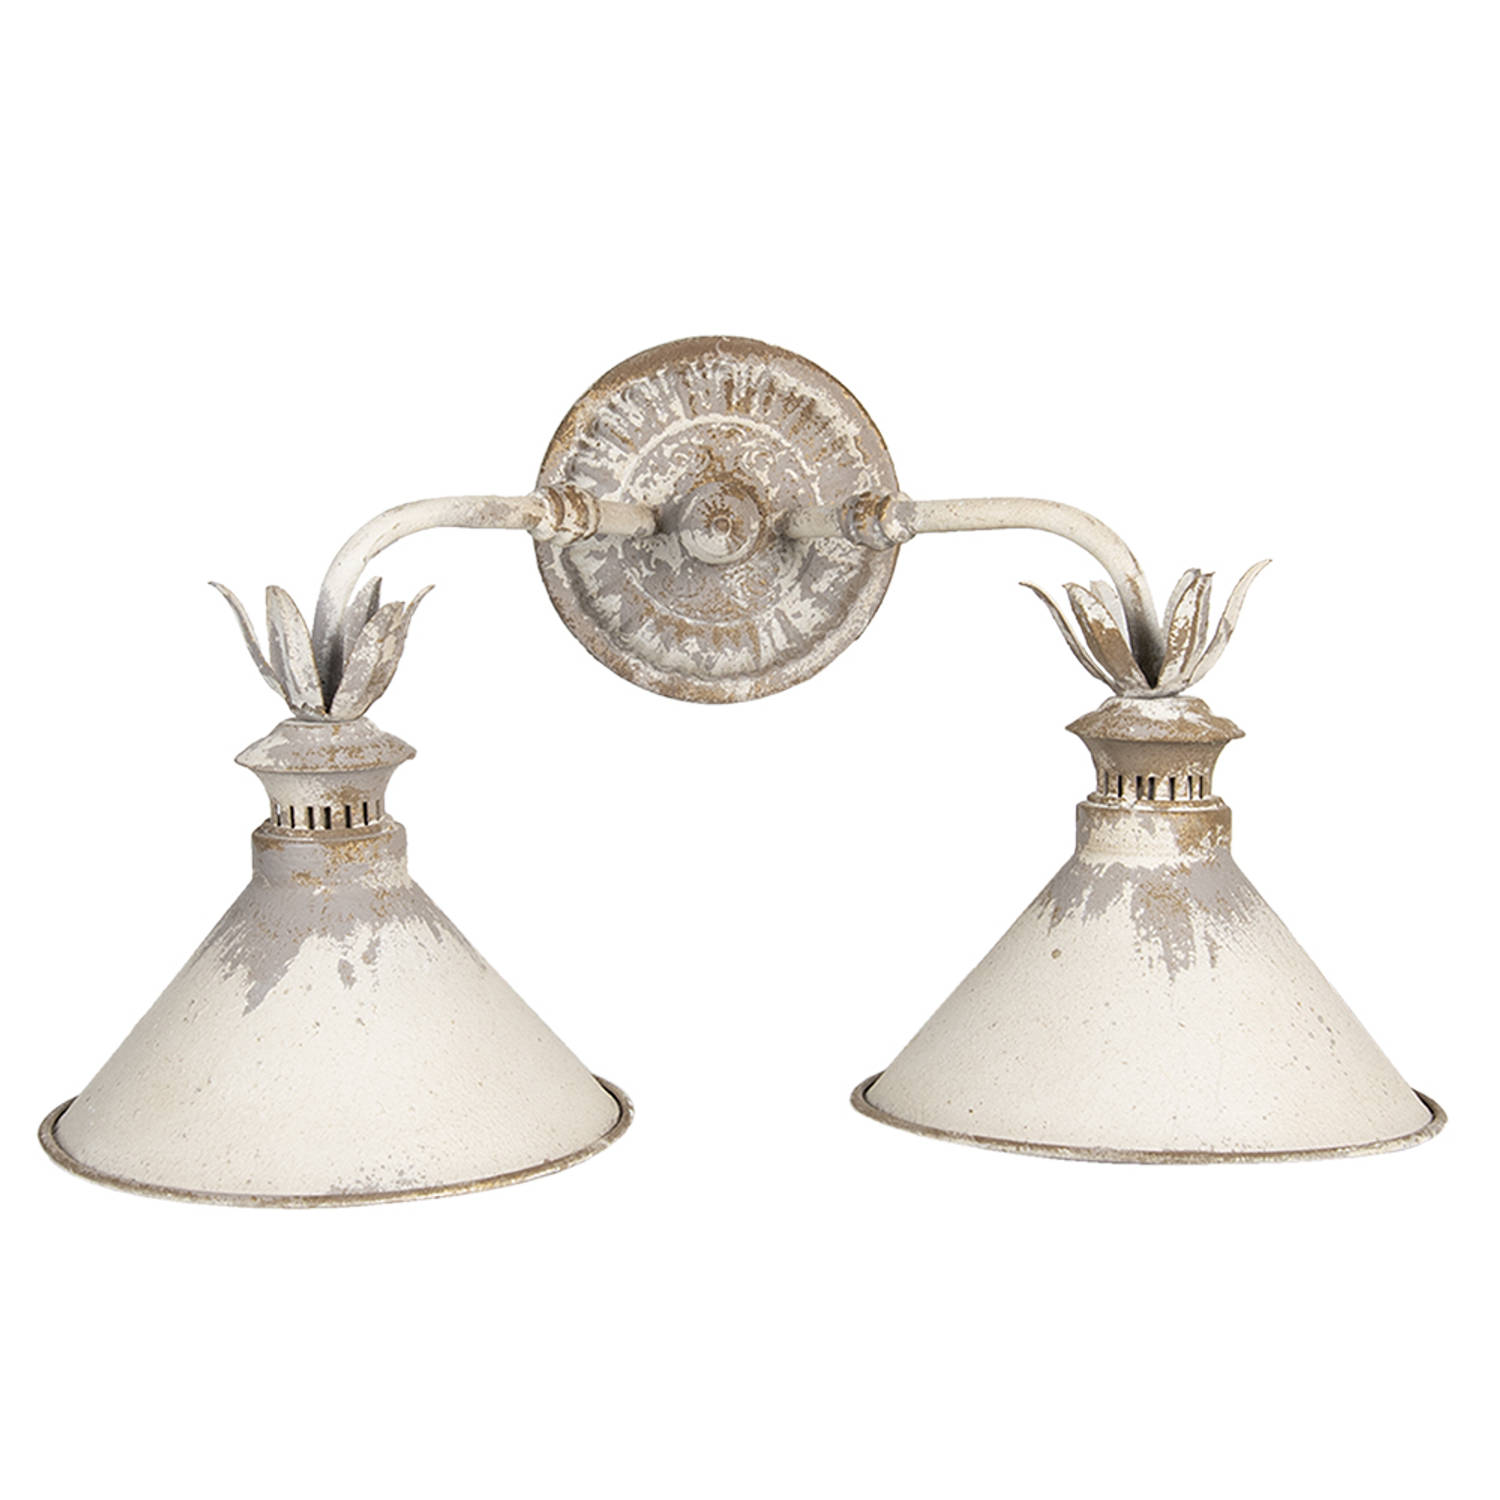 HAES DECO - Wandlamp - Shabby Chic - Dubbele Vintage / Retro Lamp, formaat 56x30x33 cm - Bruin / Wit Metaal - Muurlamp, Sfeerlamp